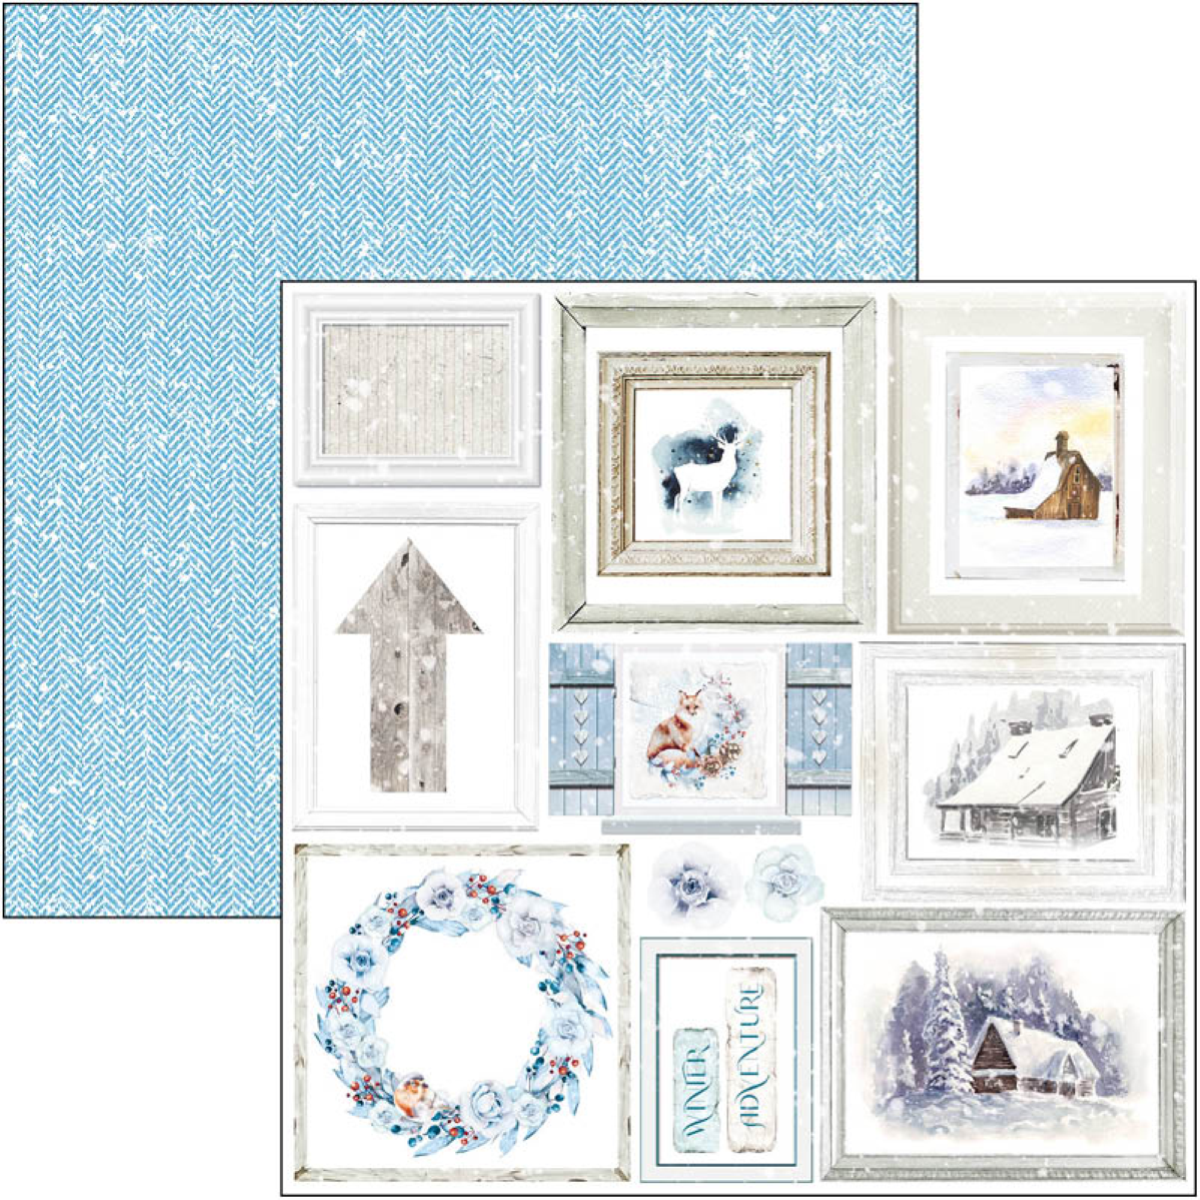 Ciao Bella - Winter Journey -  Fussy Cut - Paper Pad  - 6 x 6"